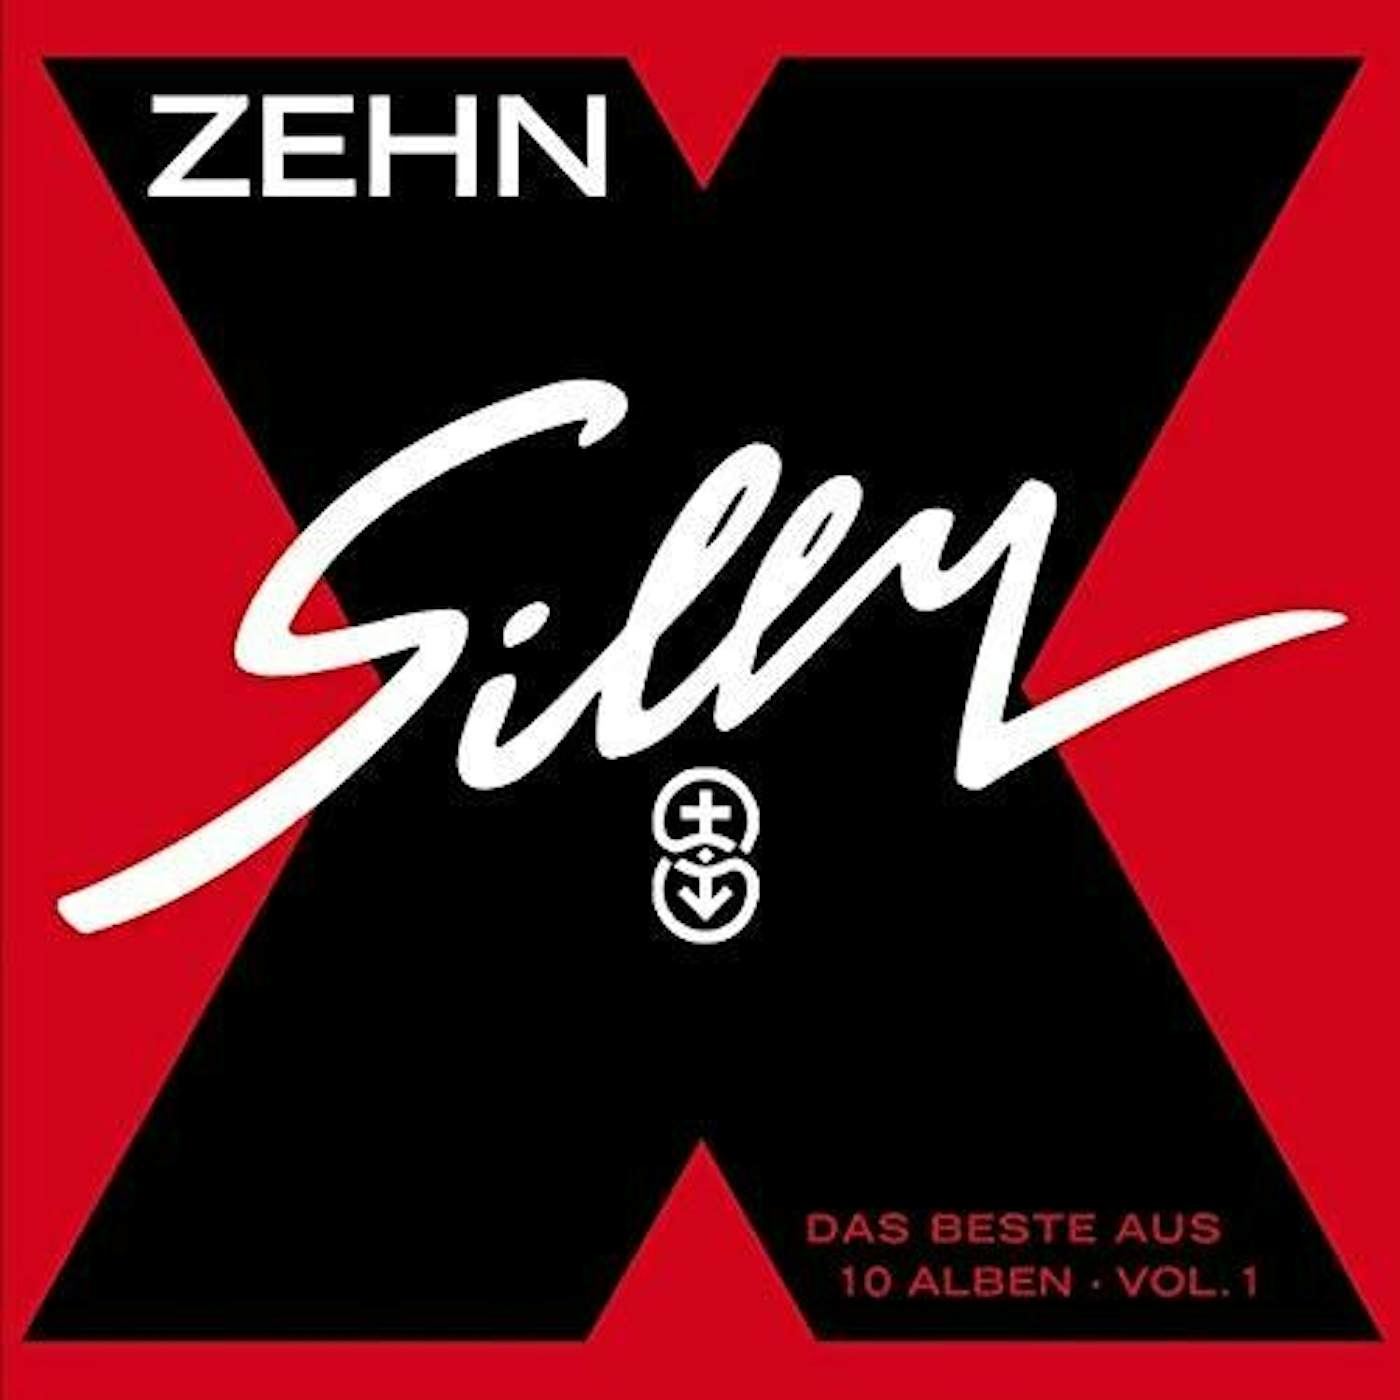 Silly ZEHN VOL 1 CD